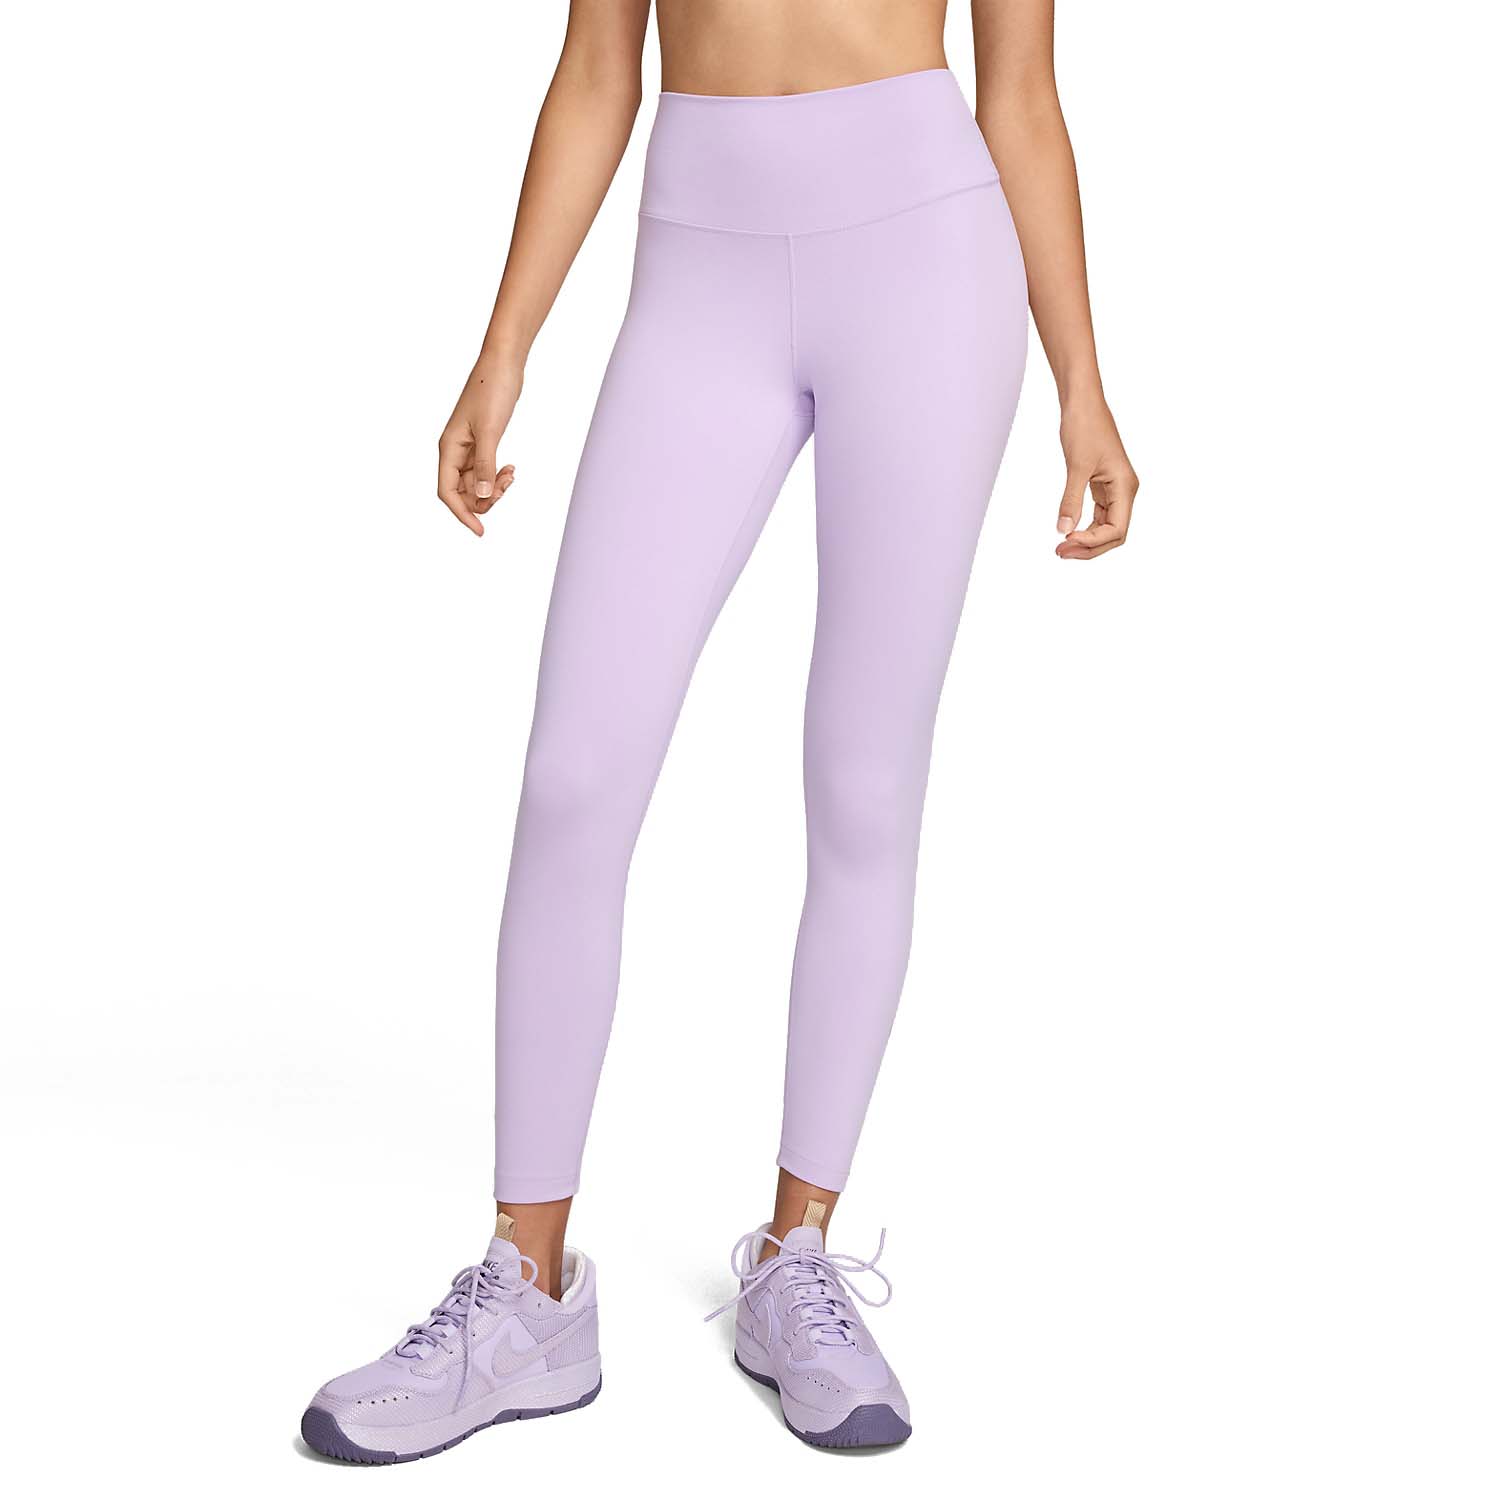 Nike One 7/8 Tights - Lilac Bloom/Black